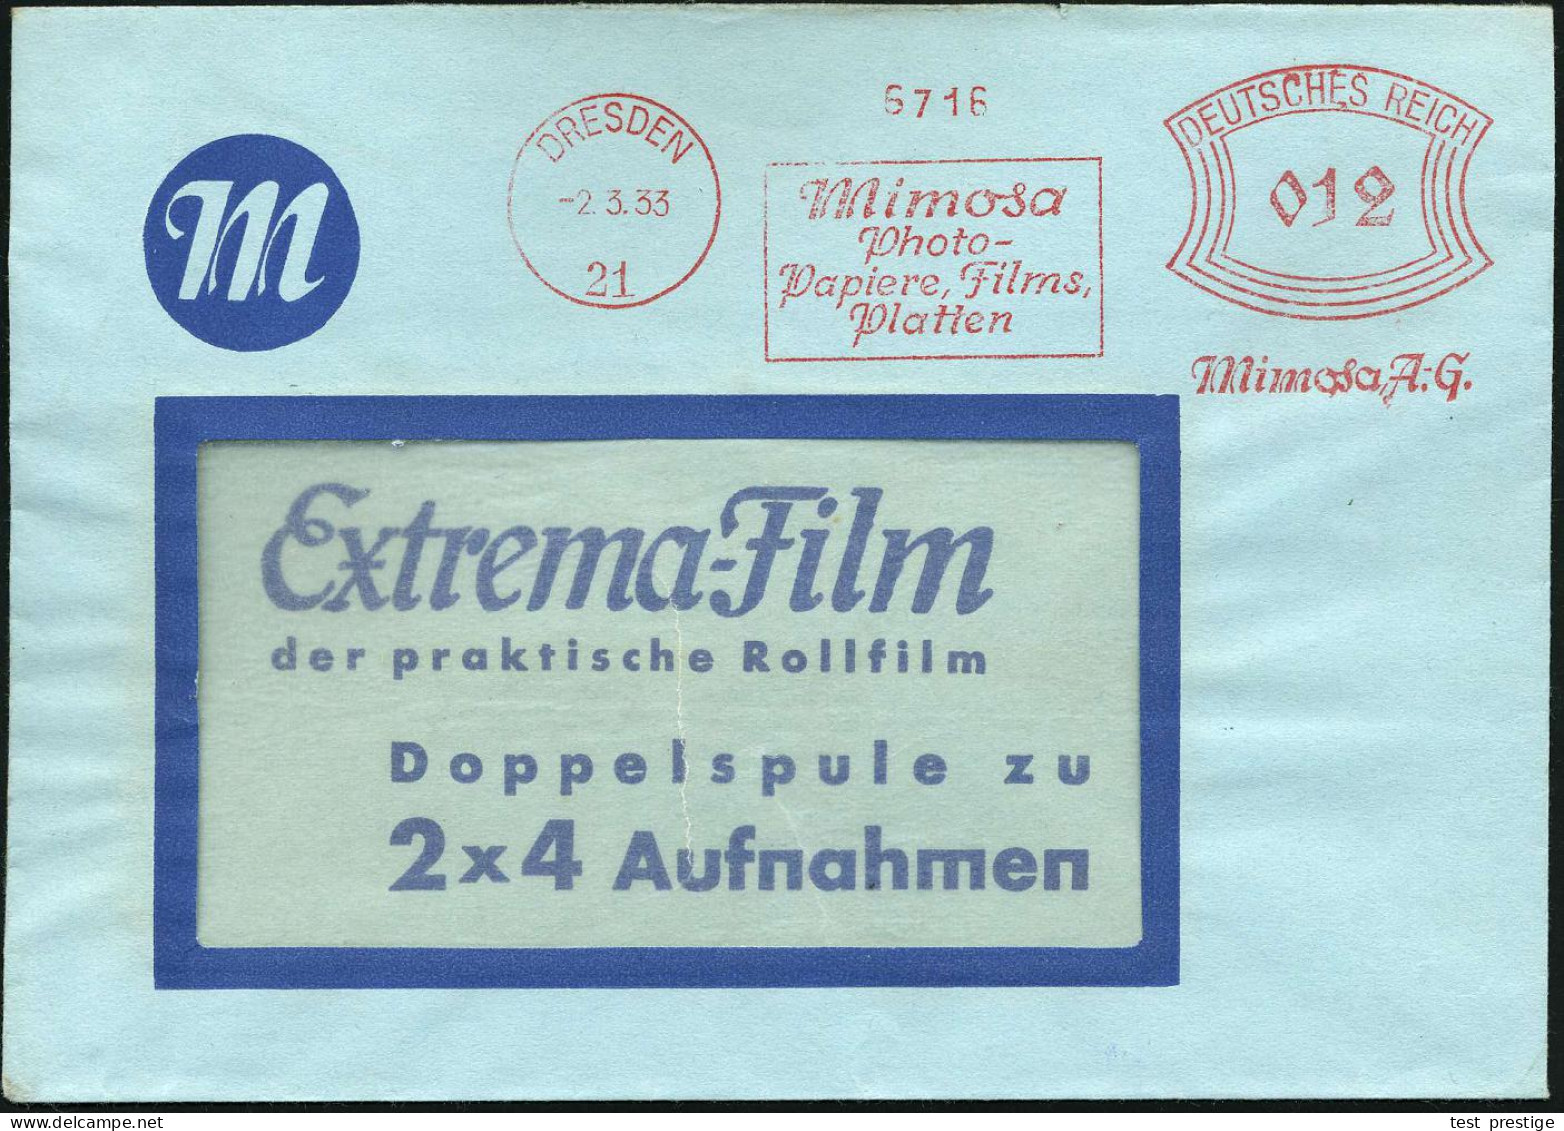 DRESDEN A21/ Mimosa/ Photo-/ Papiere,Films/ Platten.. 1933 (2.3.) AFS Francotyp Auf Dekorativem Reklame-Bf: Extrema-Film - Fotografía